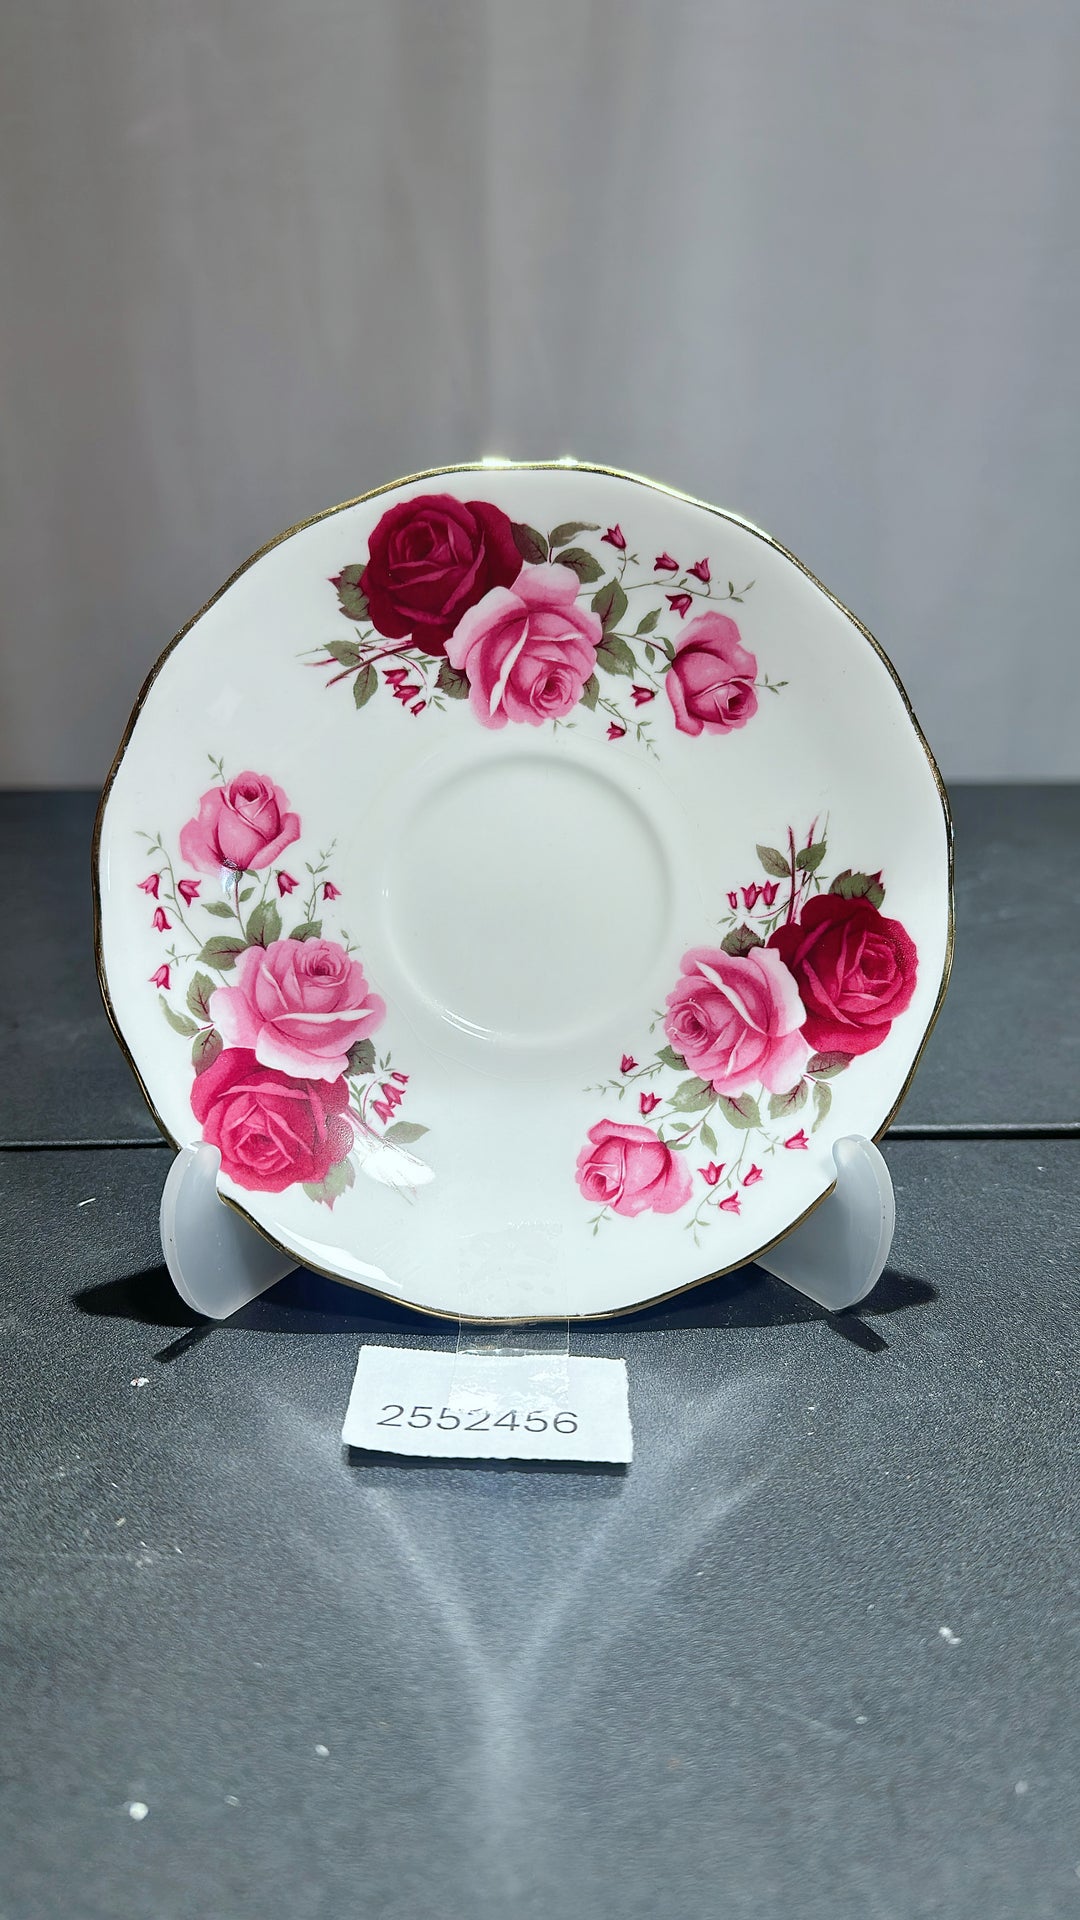 Antique Plate 2552456